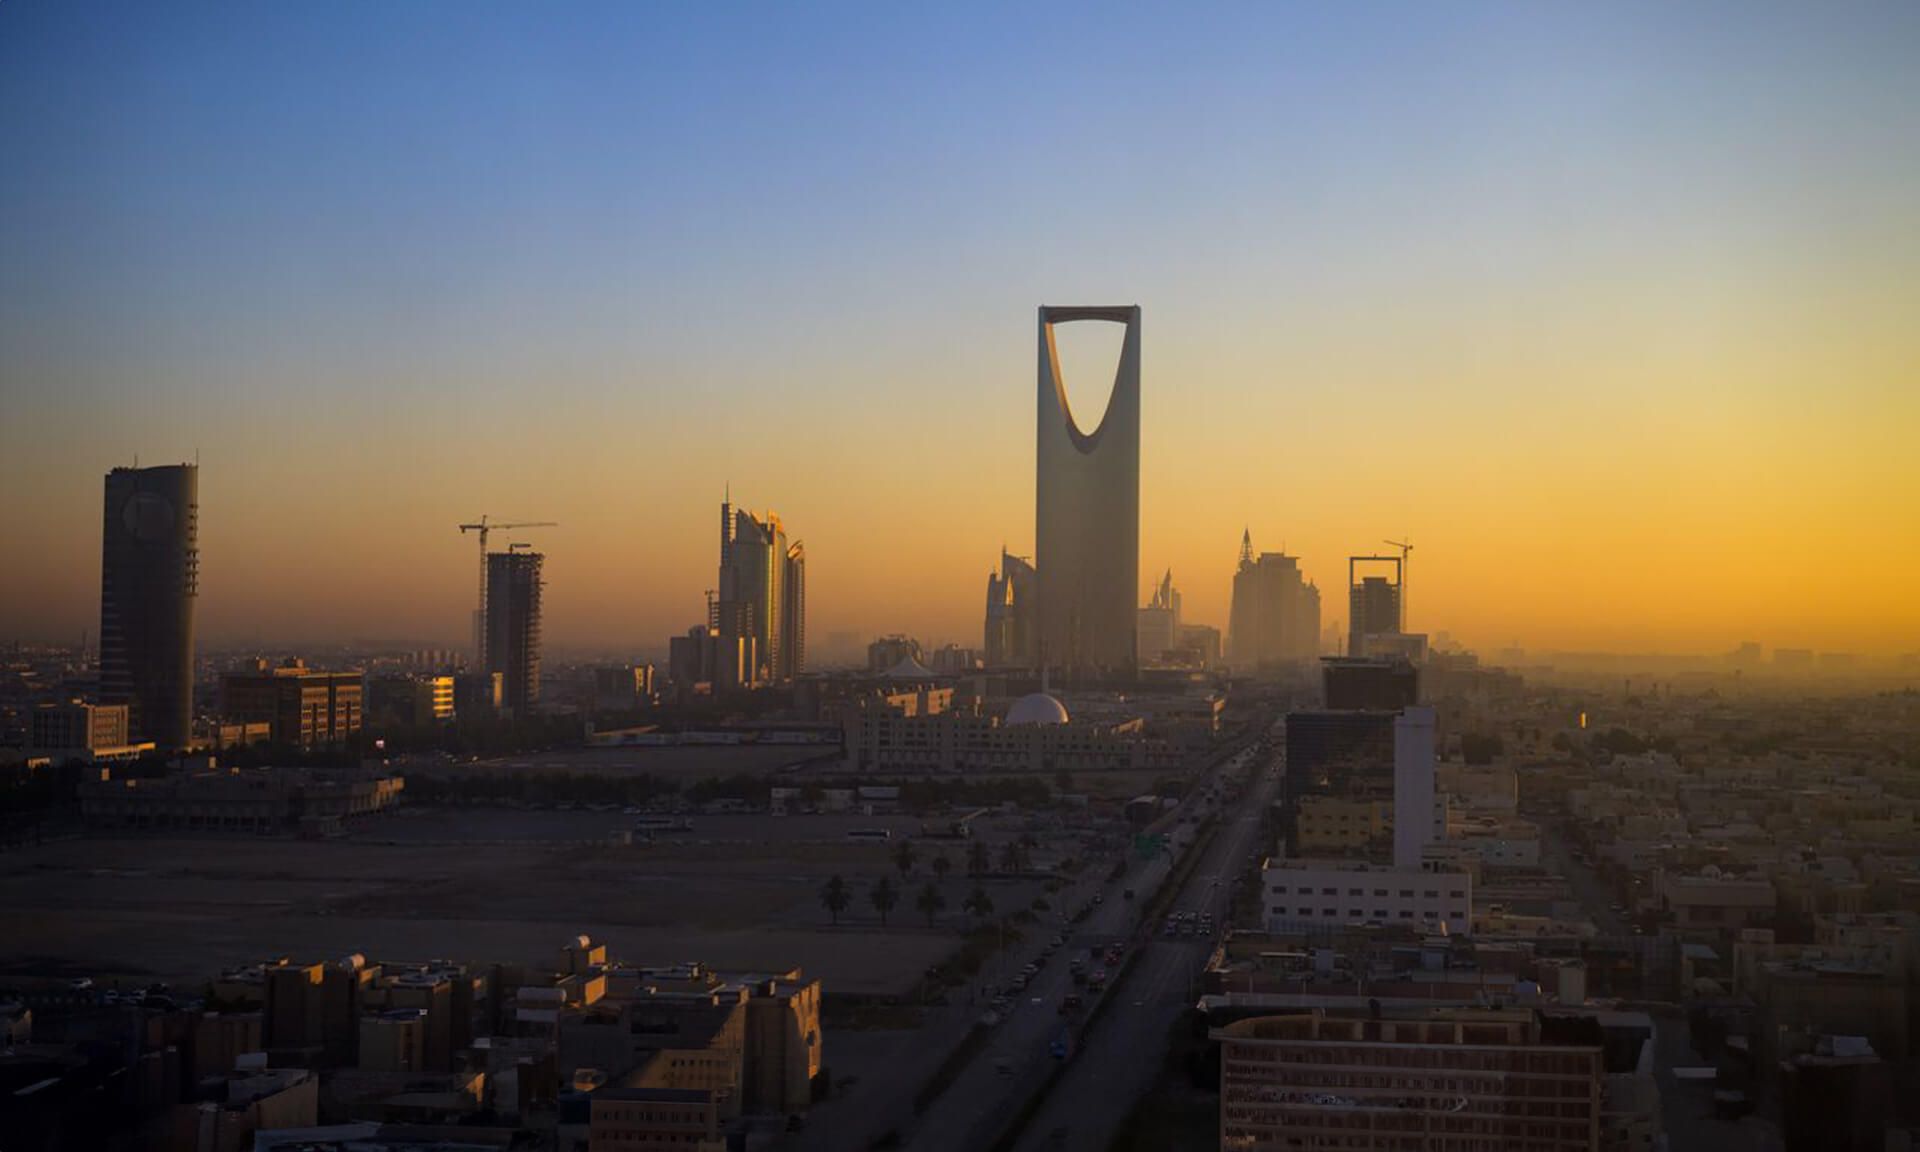 Saudi Arabia aligning their framework to achieve Vision 2030